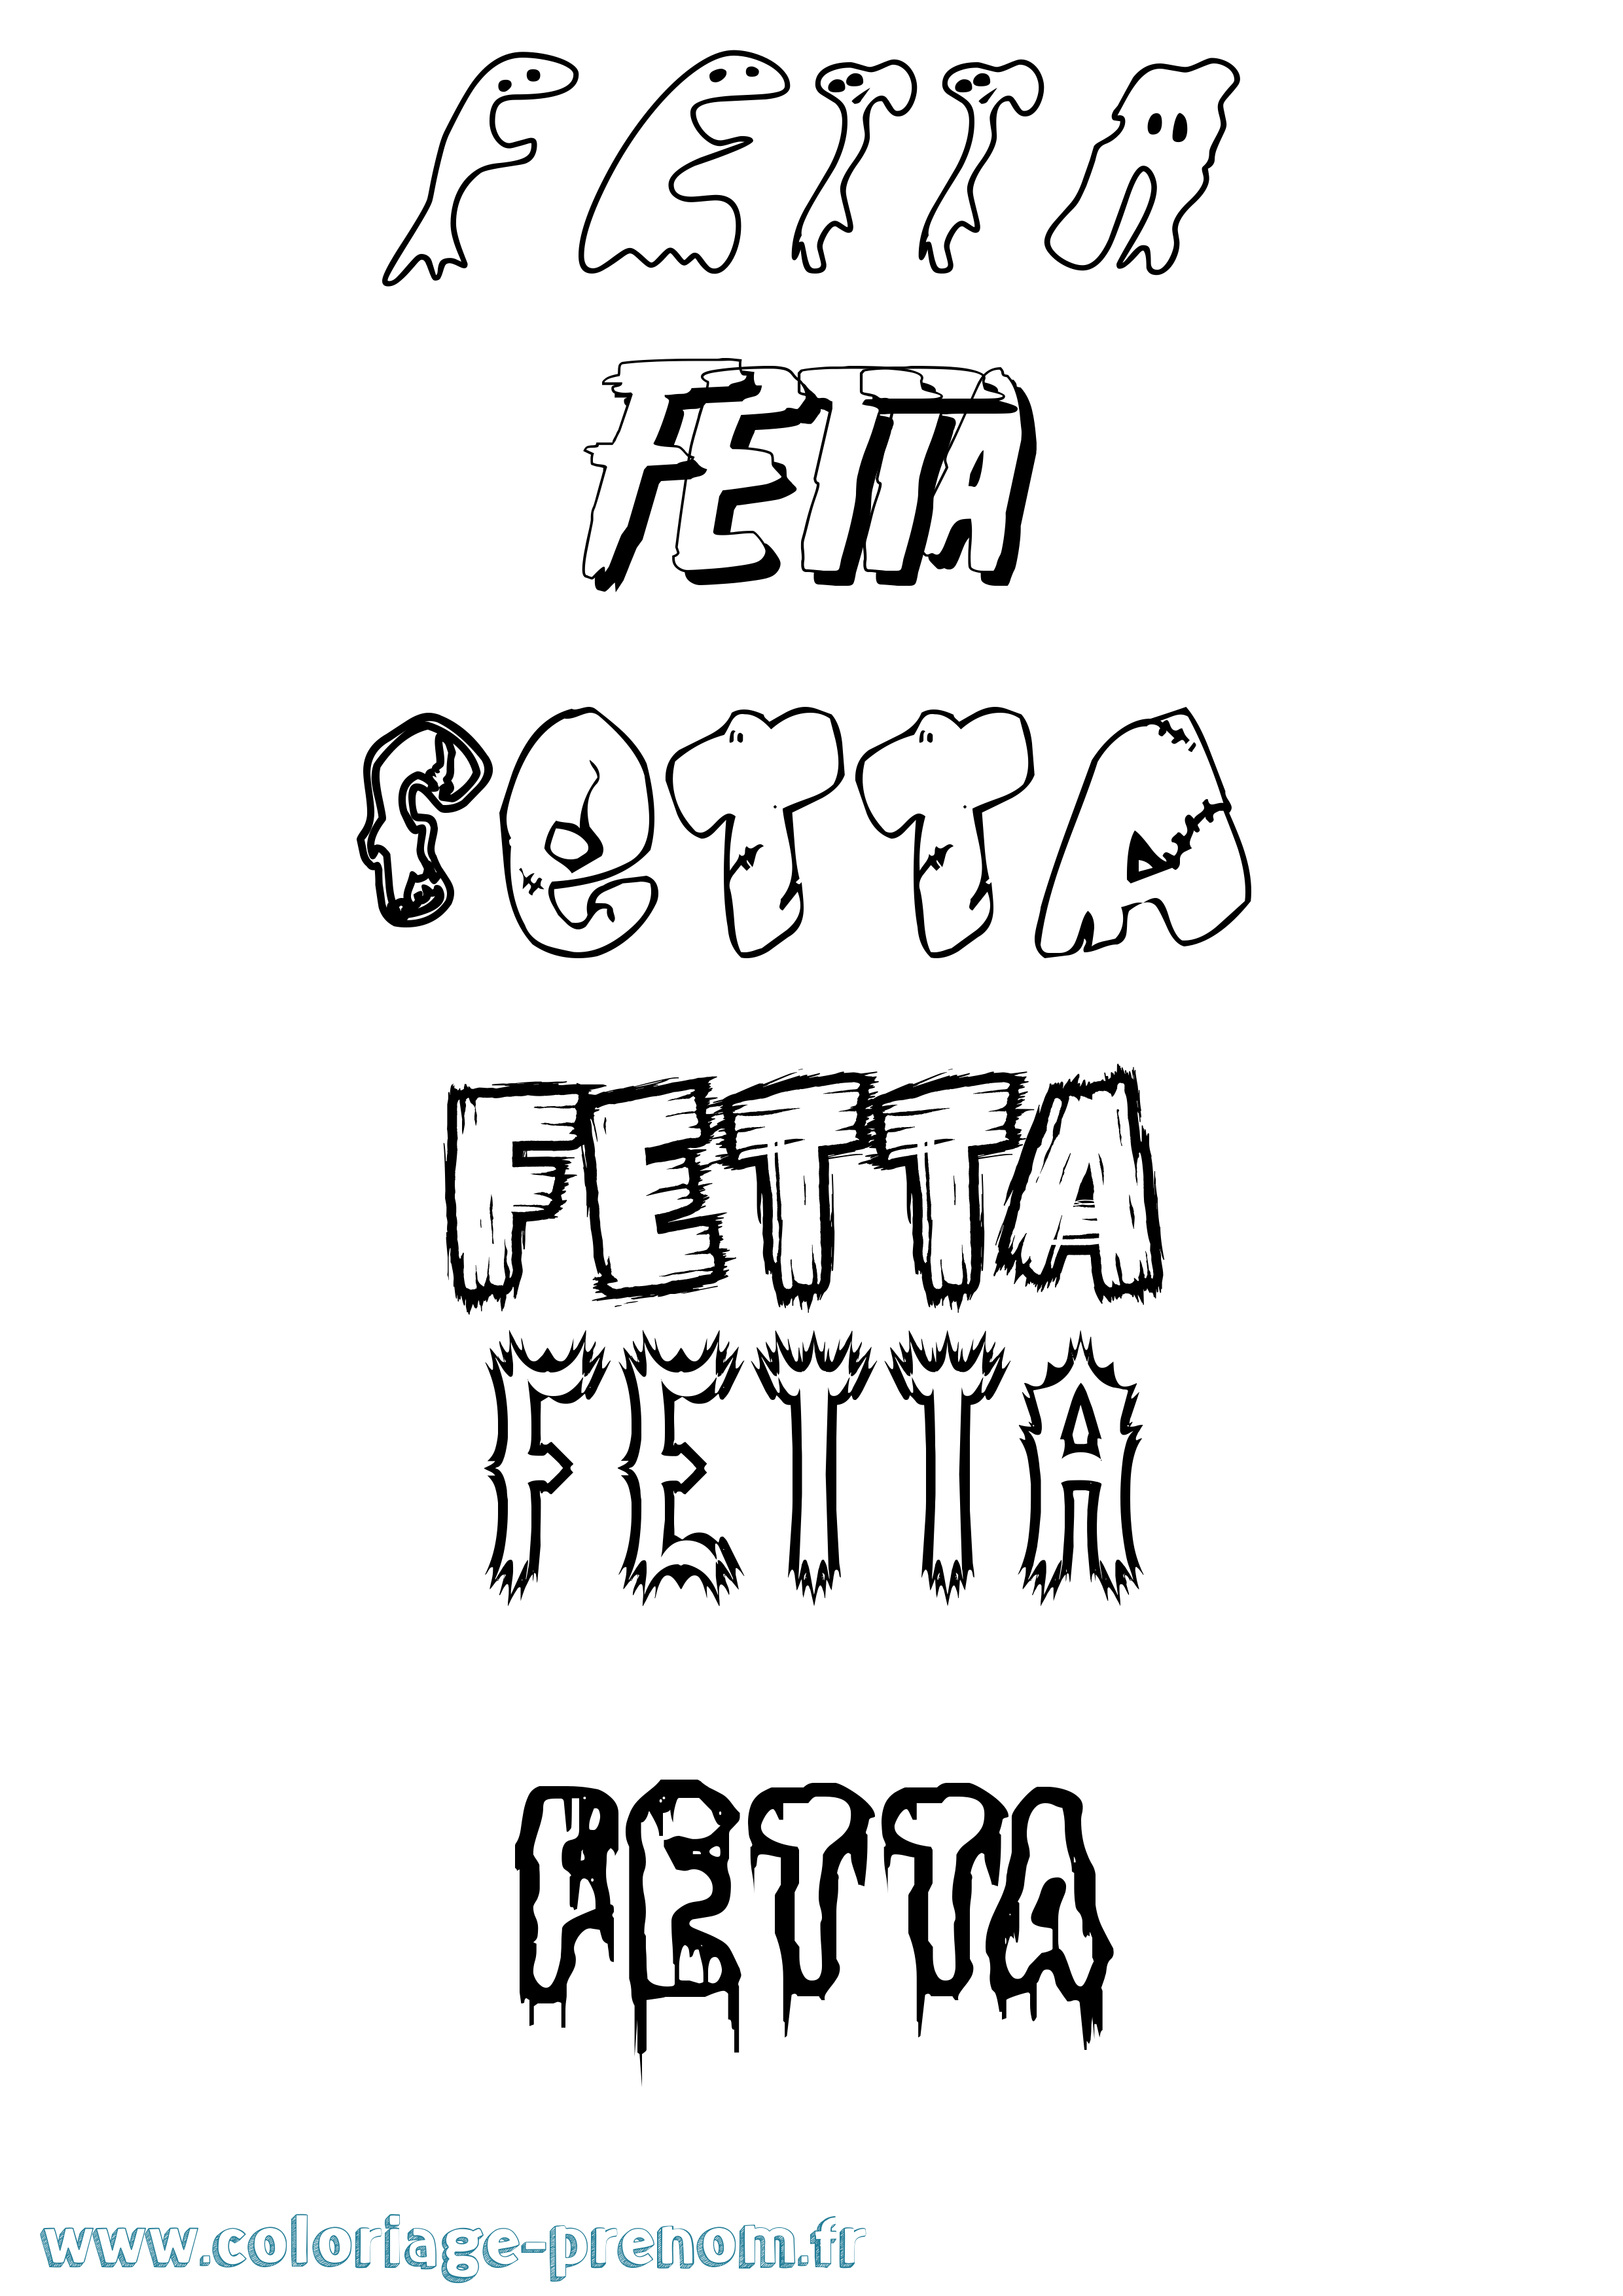 Coloriage prénom Fetta Frisson